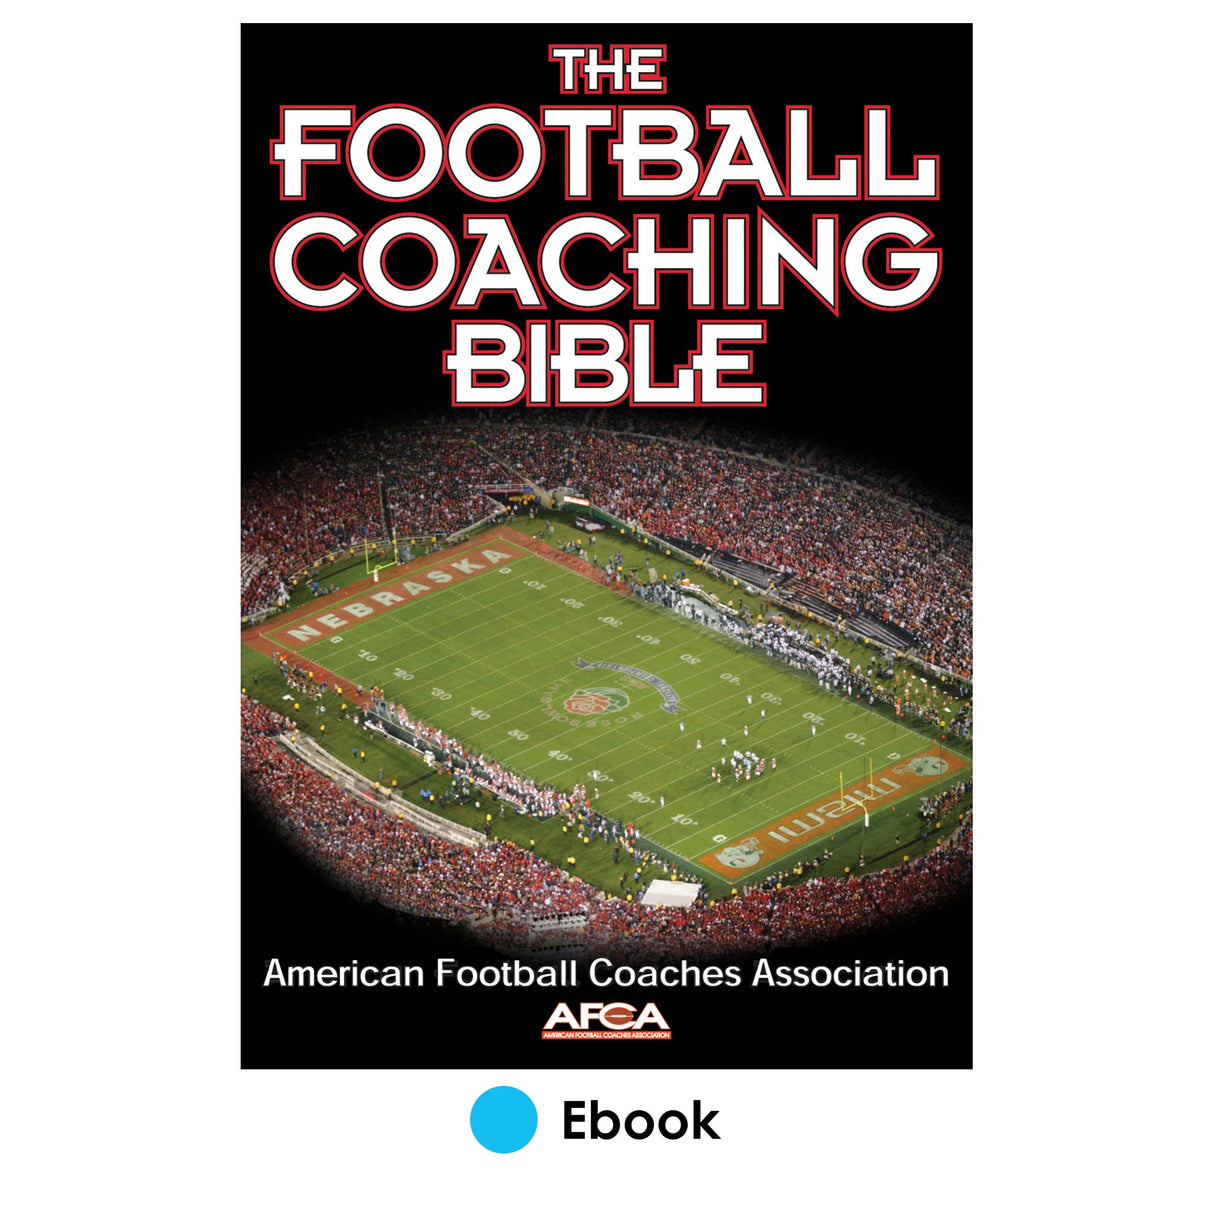 Football Coaching Bible PDF, The